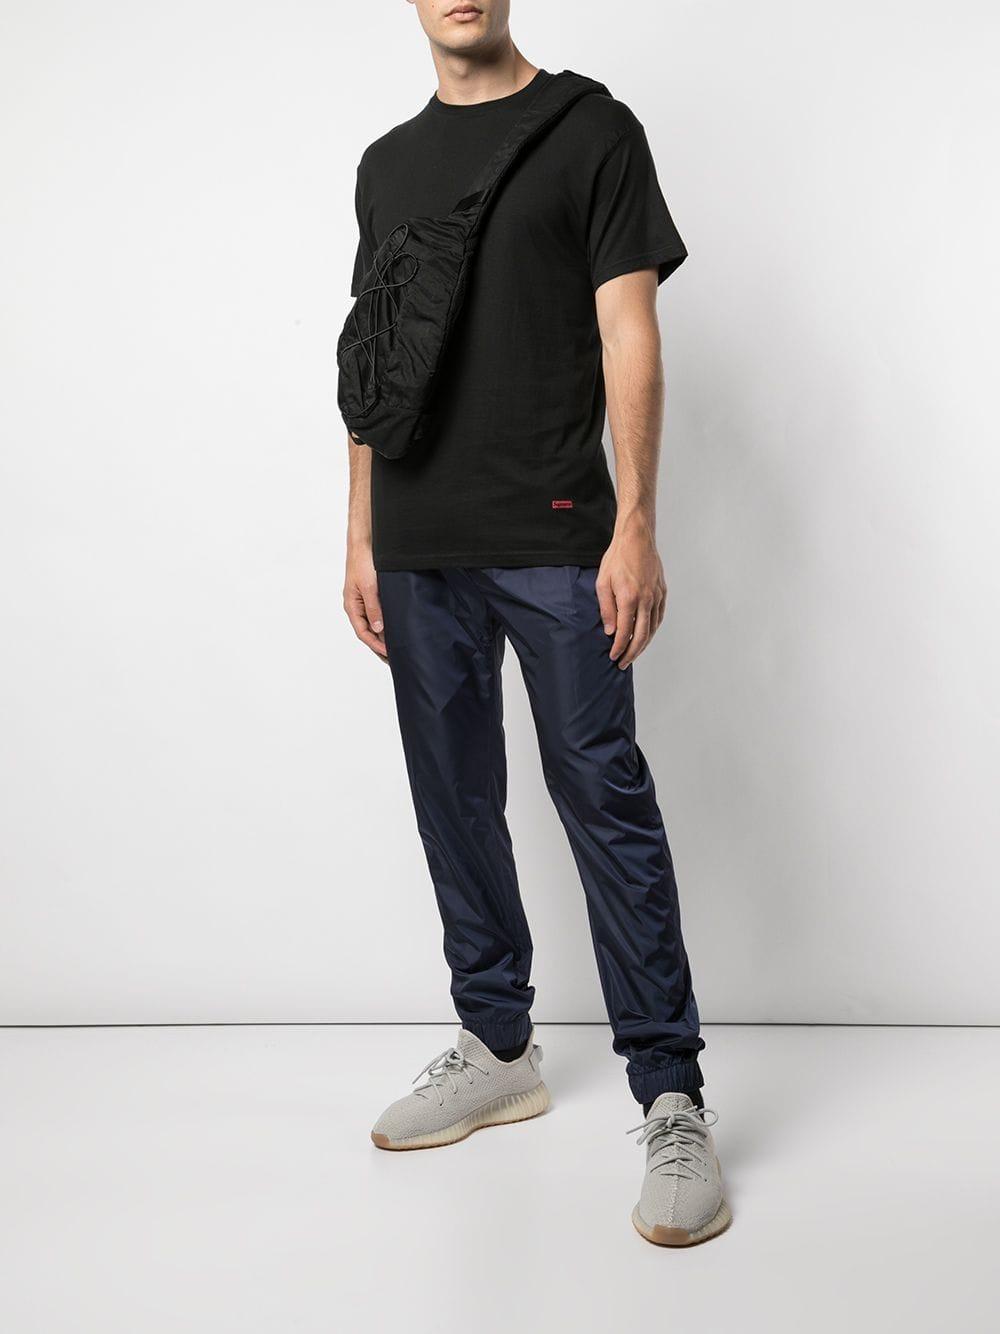 Supreme Cotton Hanes T-shirt Set in Black for Men - Lyst